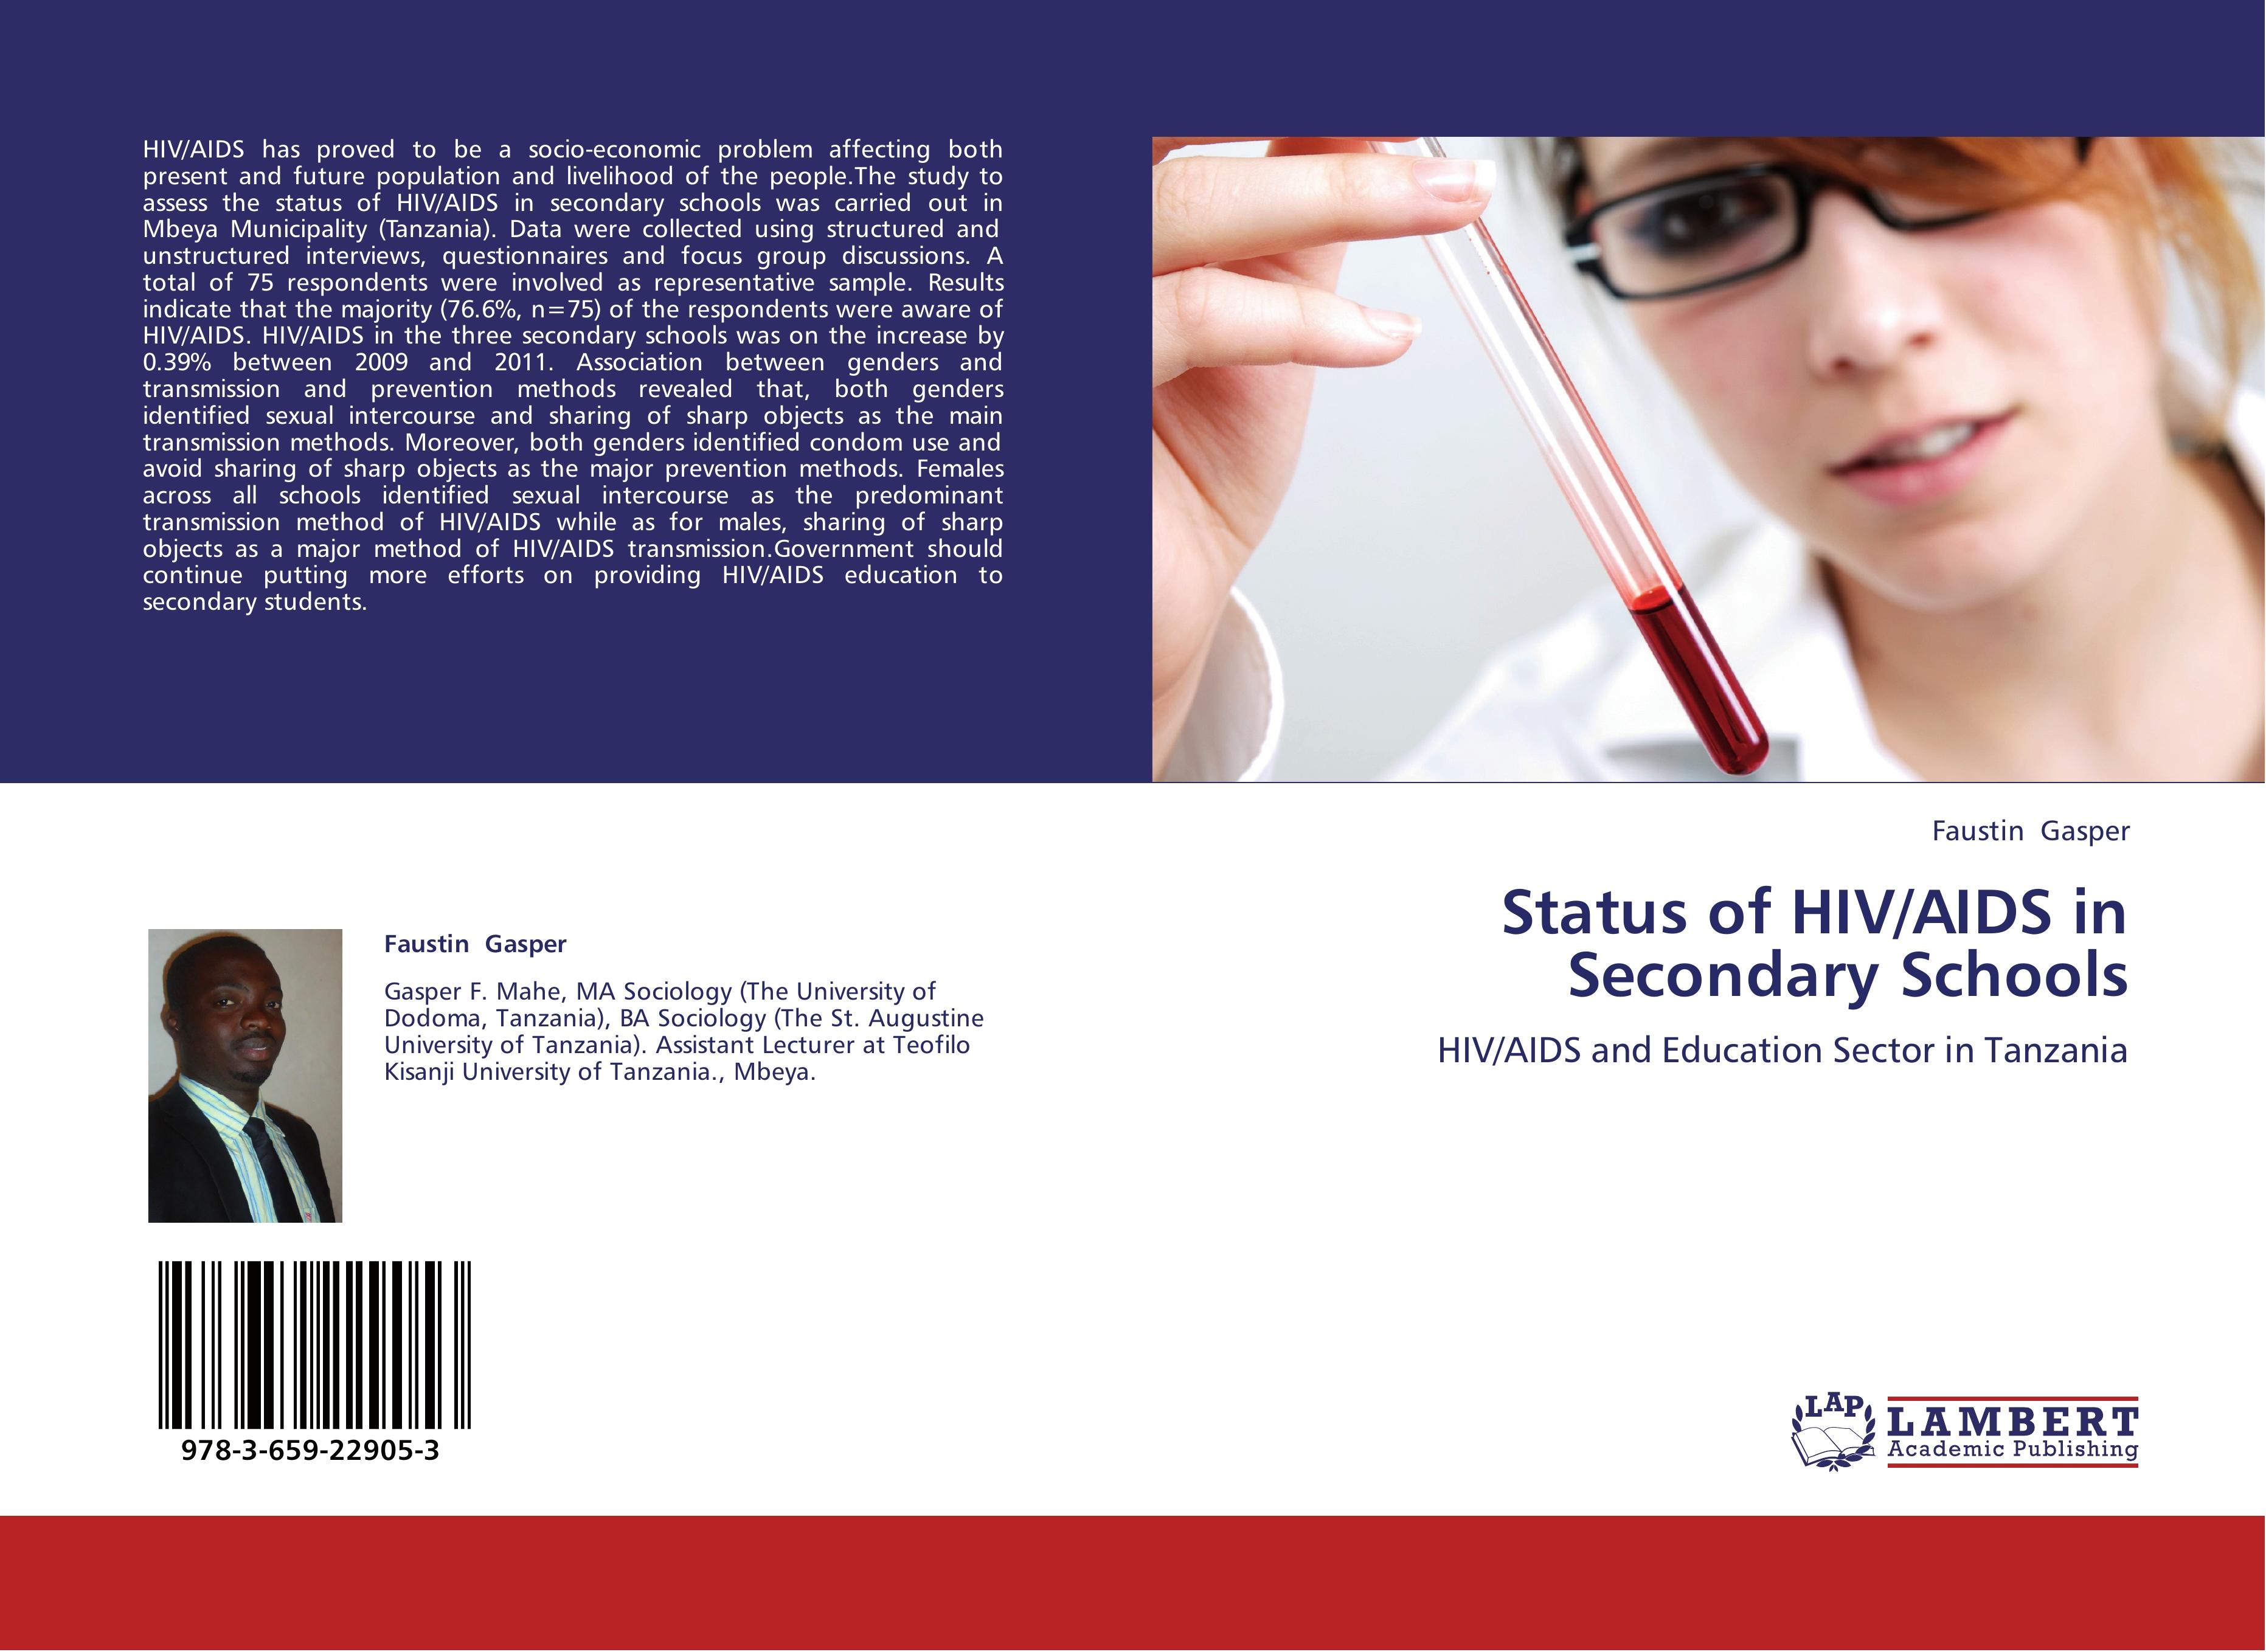 Status of HIV/AIDS in Secondary Schools - Faustin Gasper